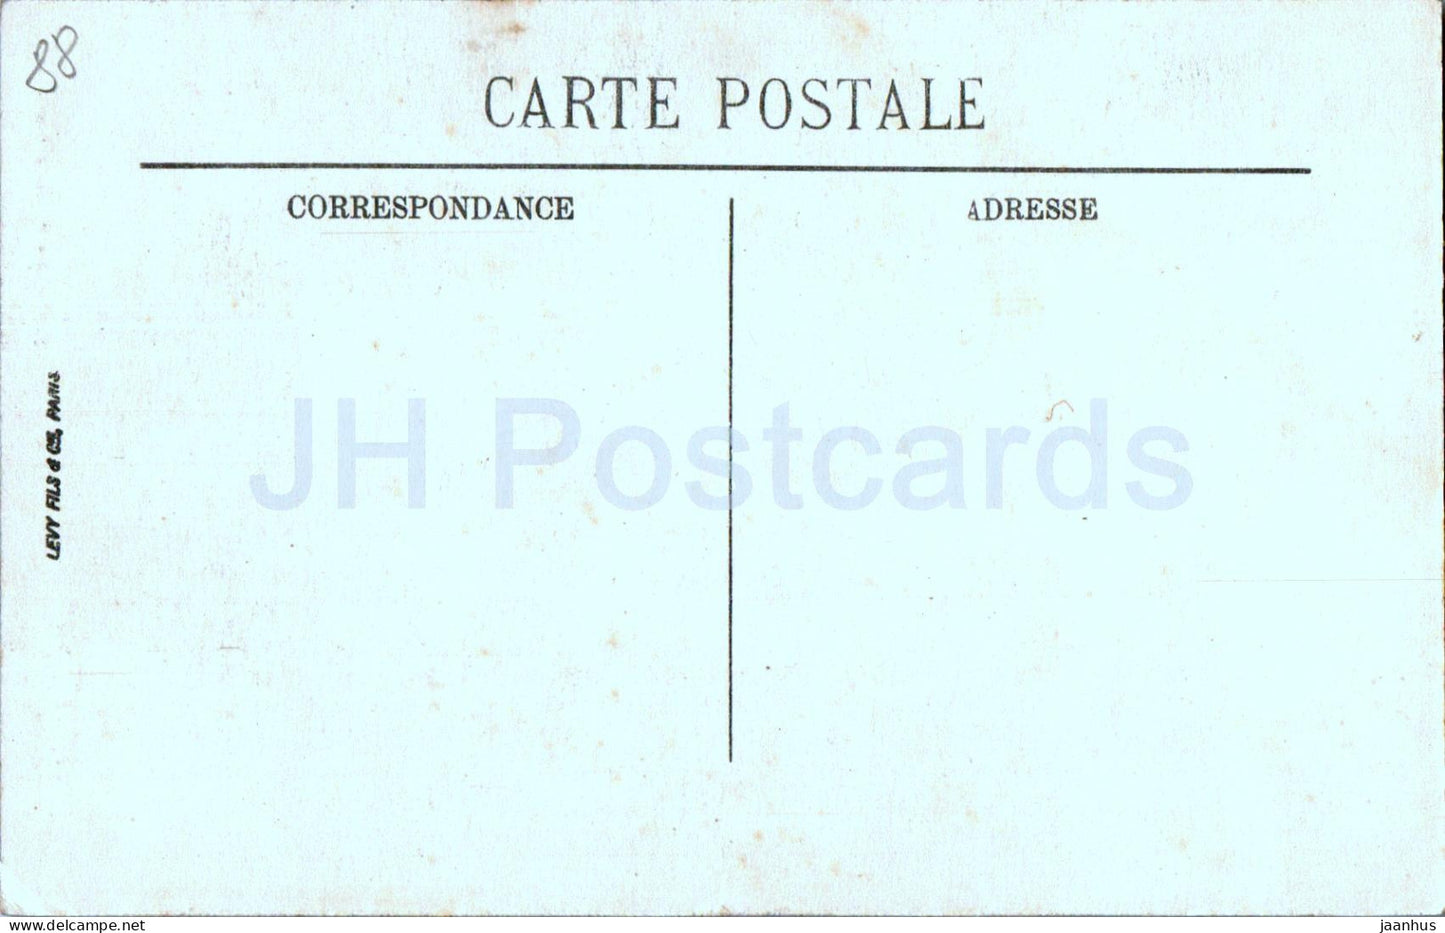 Epinal - Les Rochers d'Olima - 112 - alte Postkarte - Frankreich - unbenutzt 